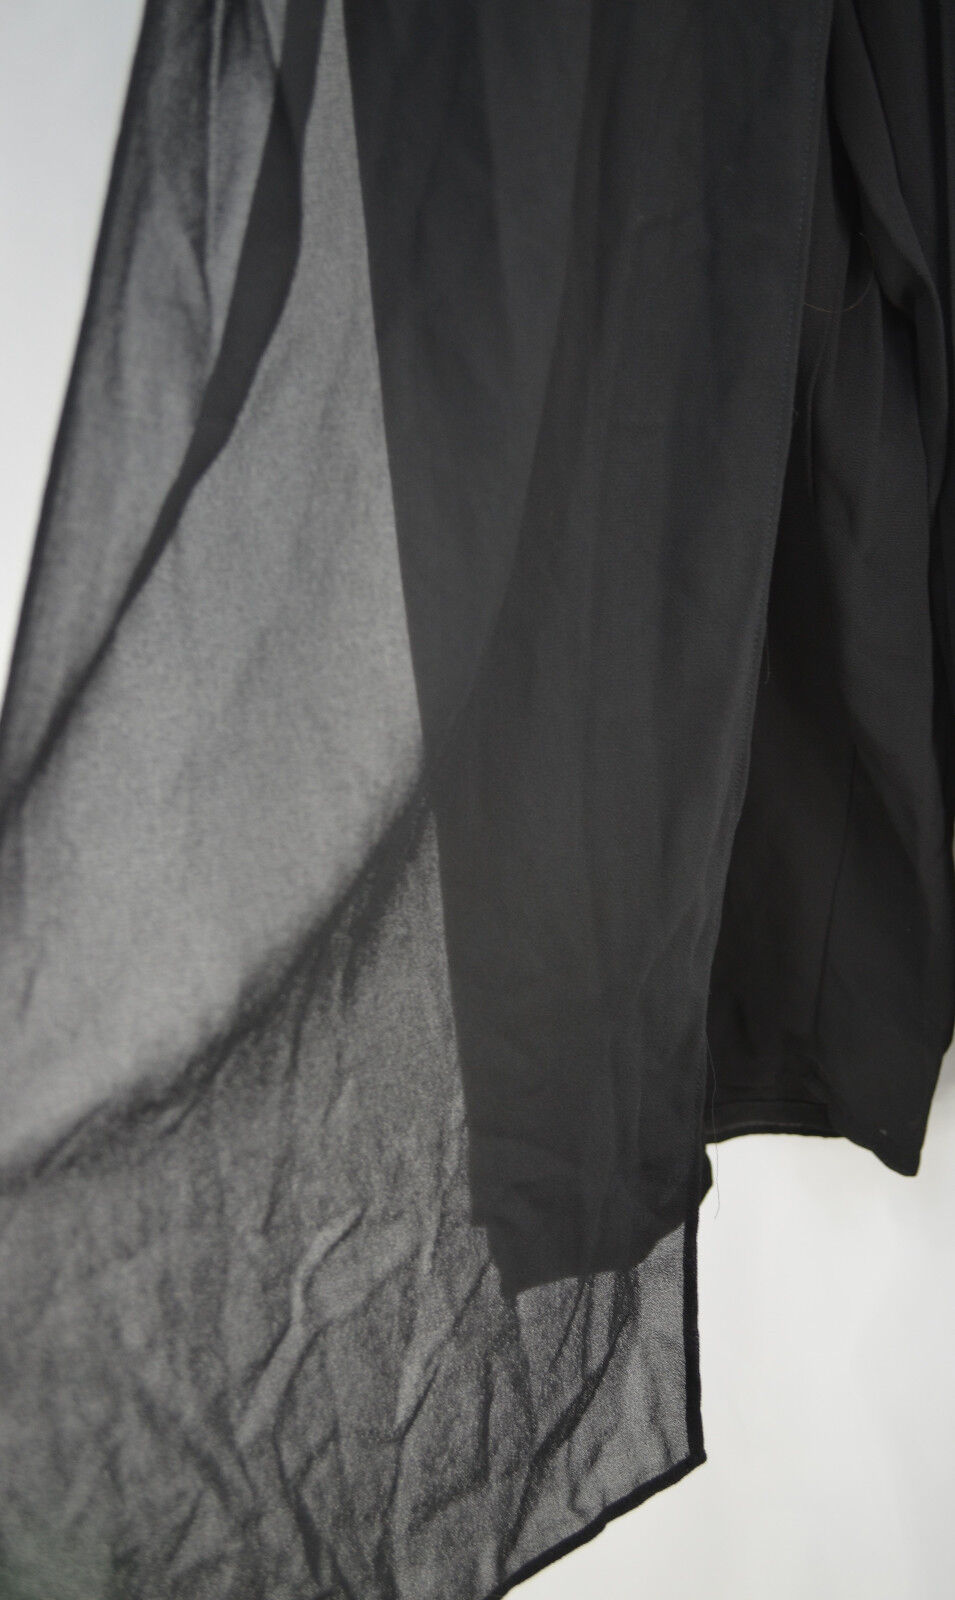 R&K evening palazzo pants black semi sheer crepe elastic waist S